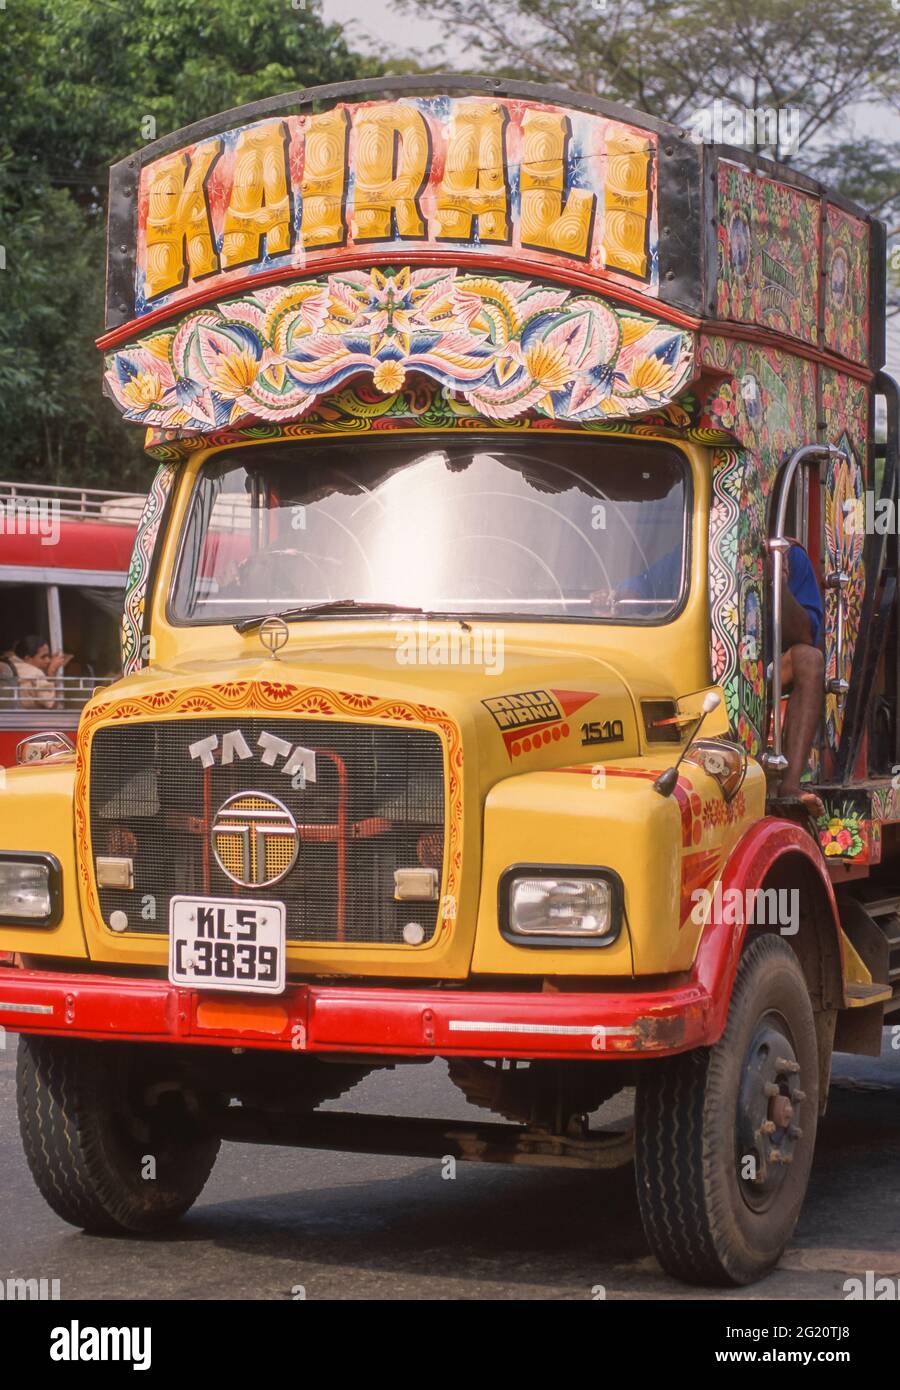 KERALA, INDIA - Colorful truck on street. Stock Photo